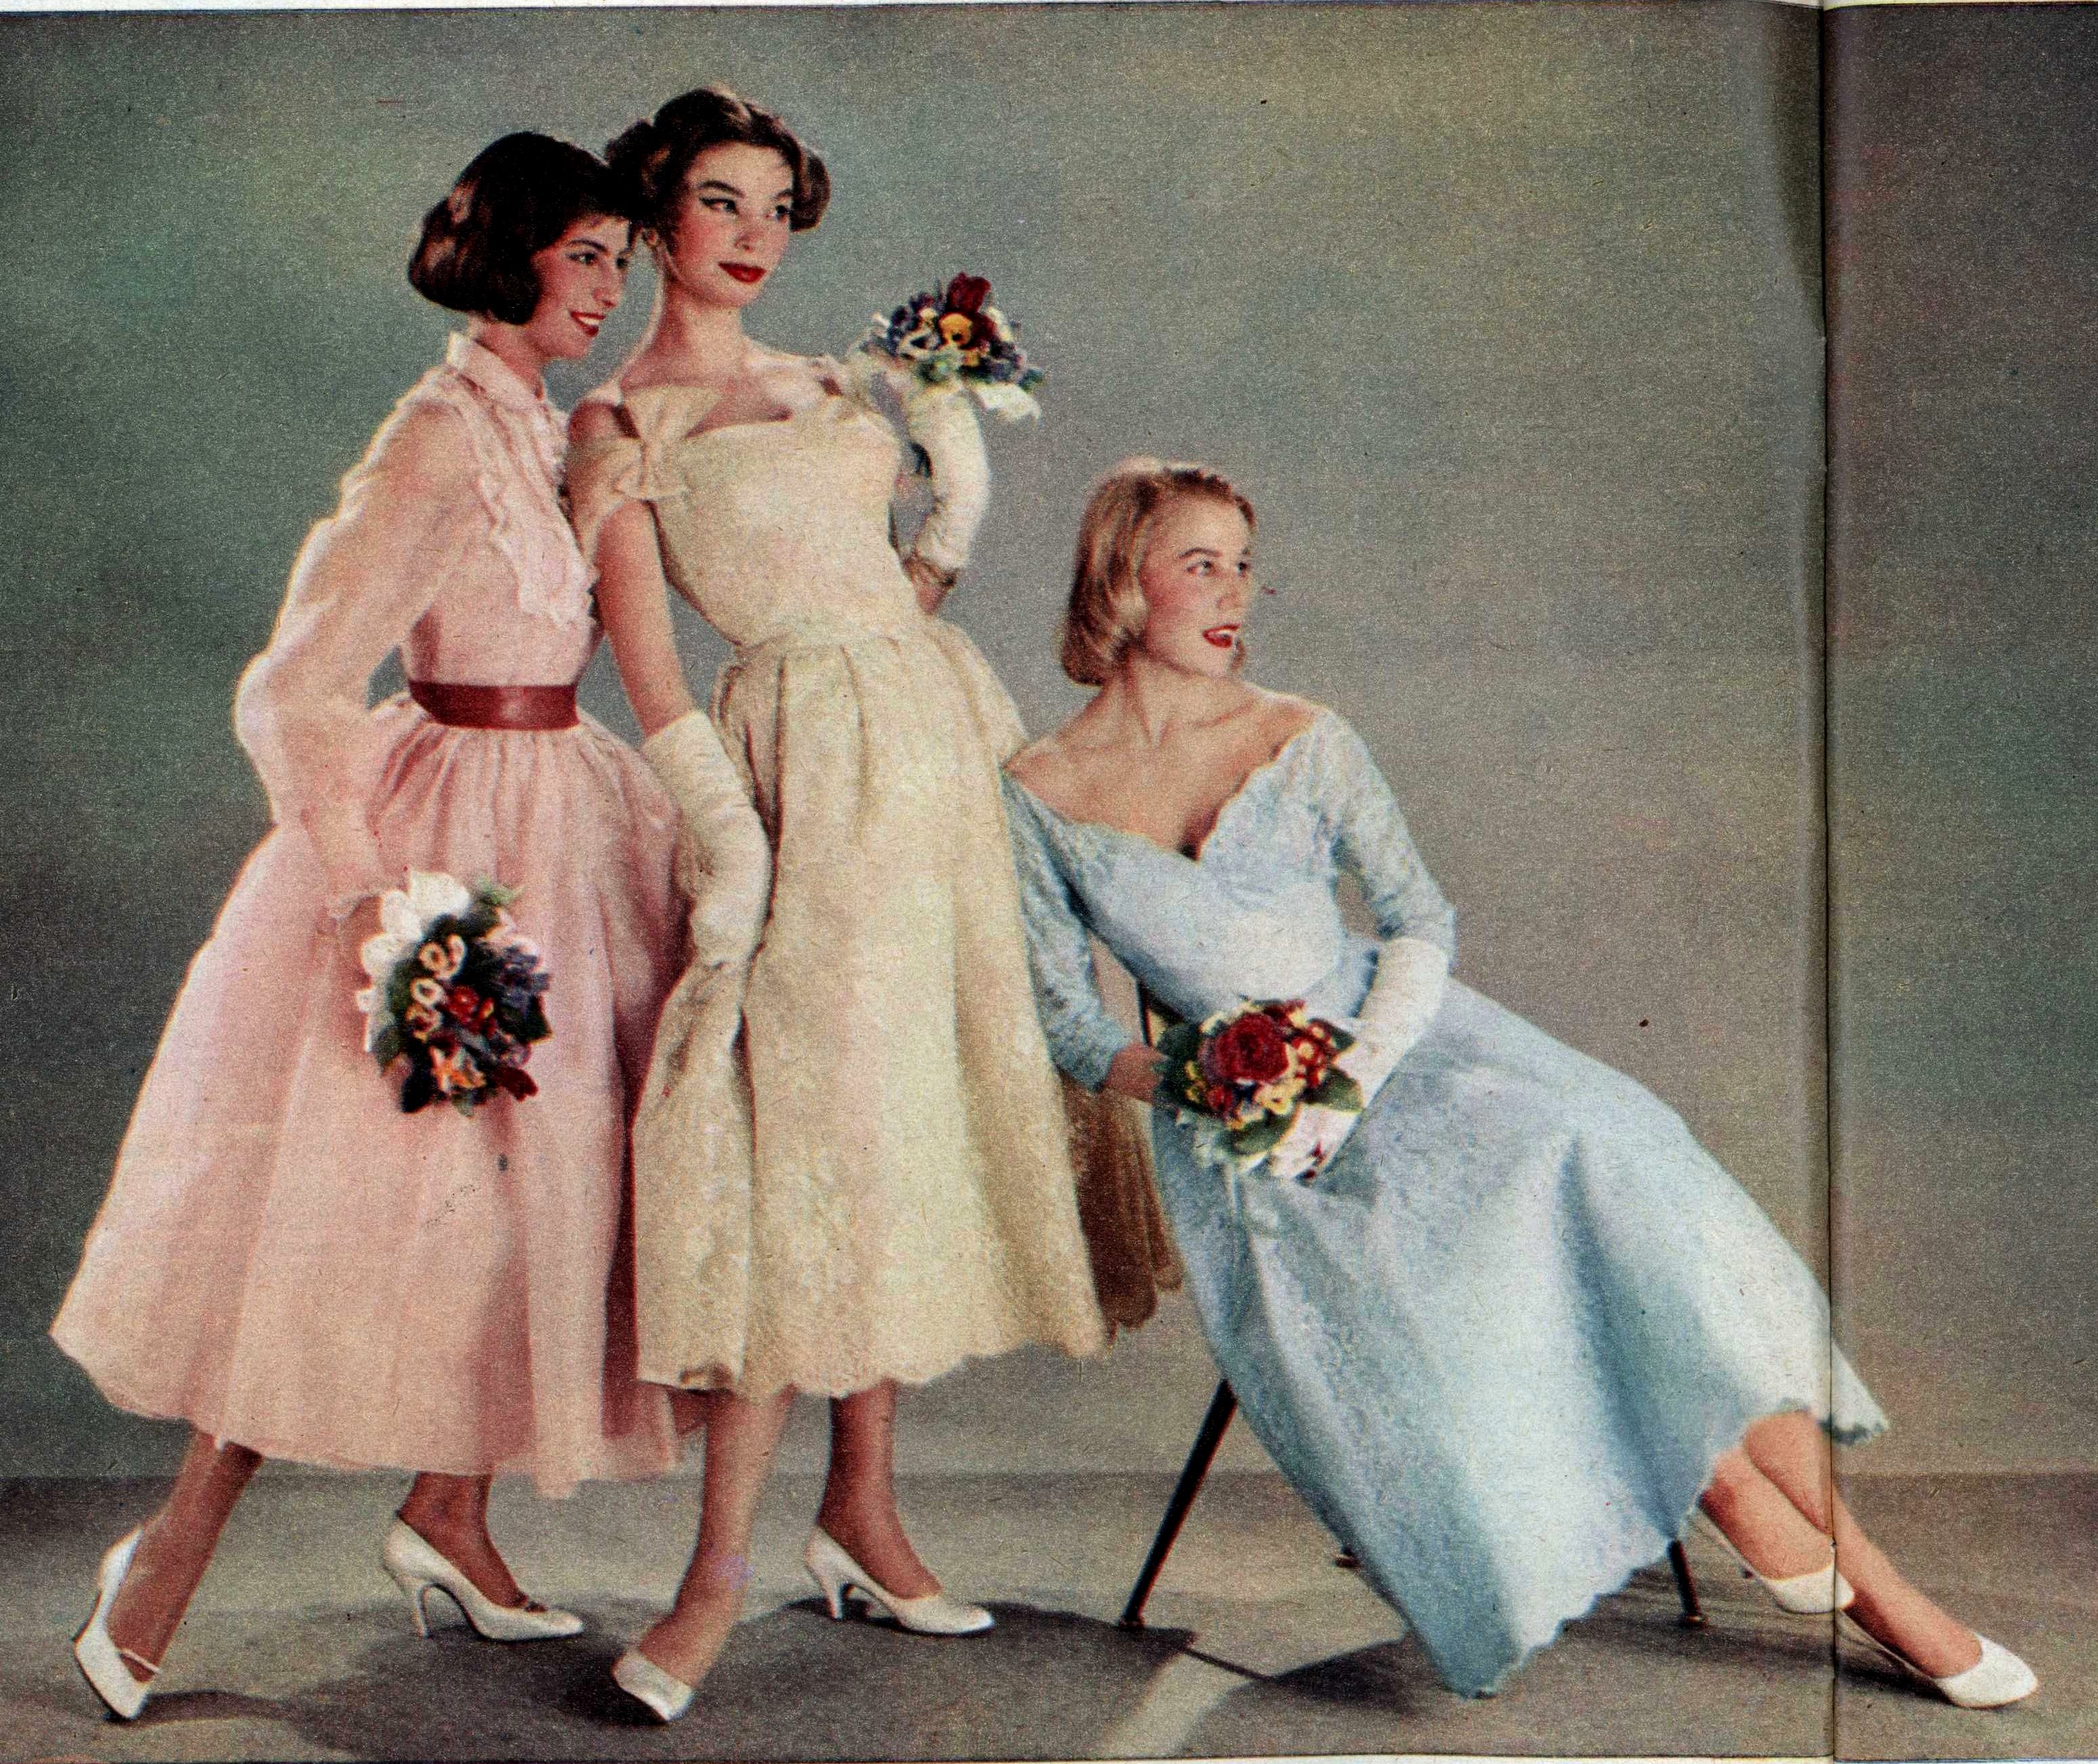 1950 s style wedding dress